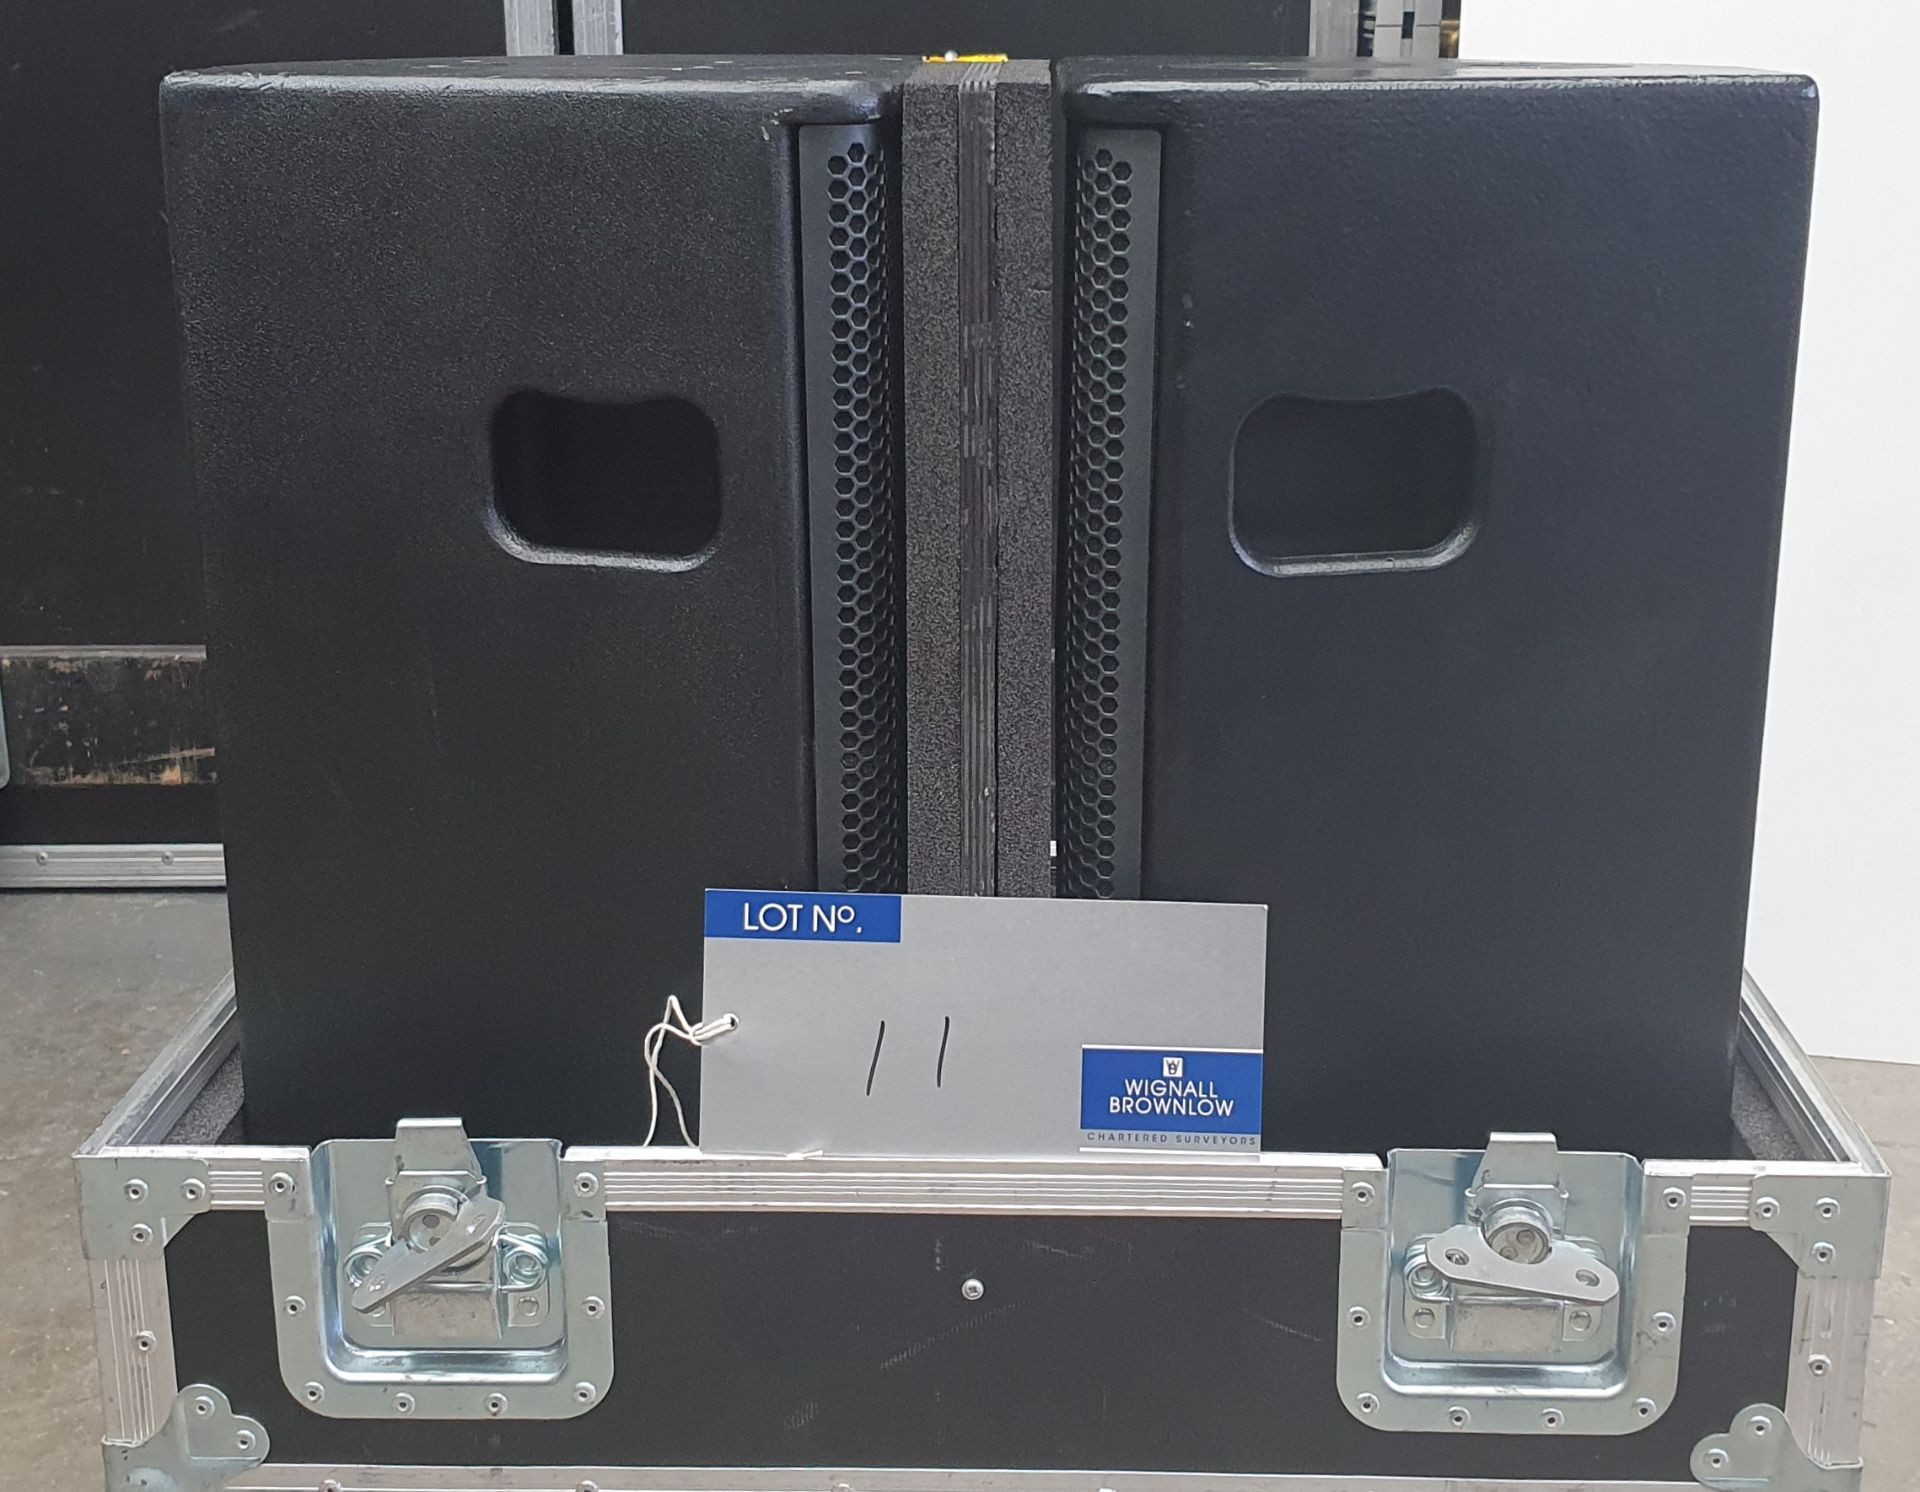 A Pair of Black Nexo PS10 Full Range Loudspeakers with mobile flight case. - Image 4 of 4